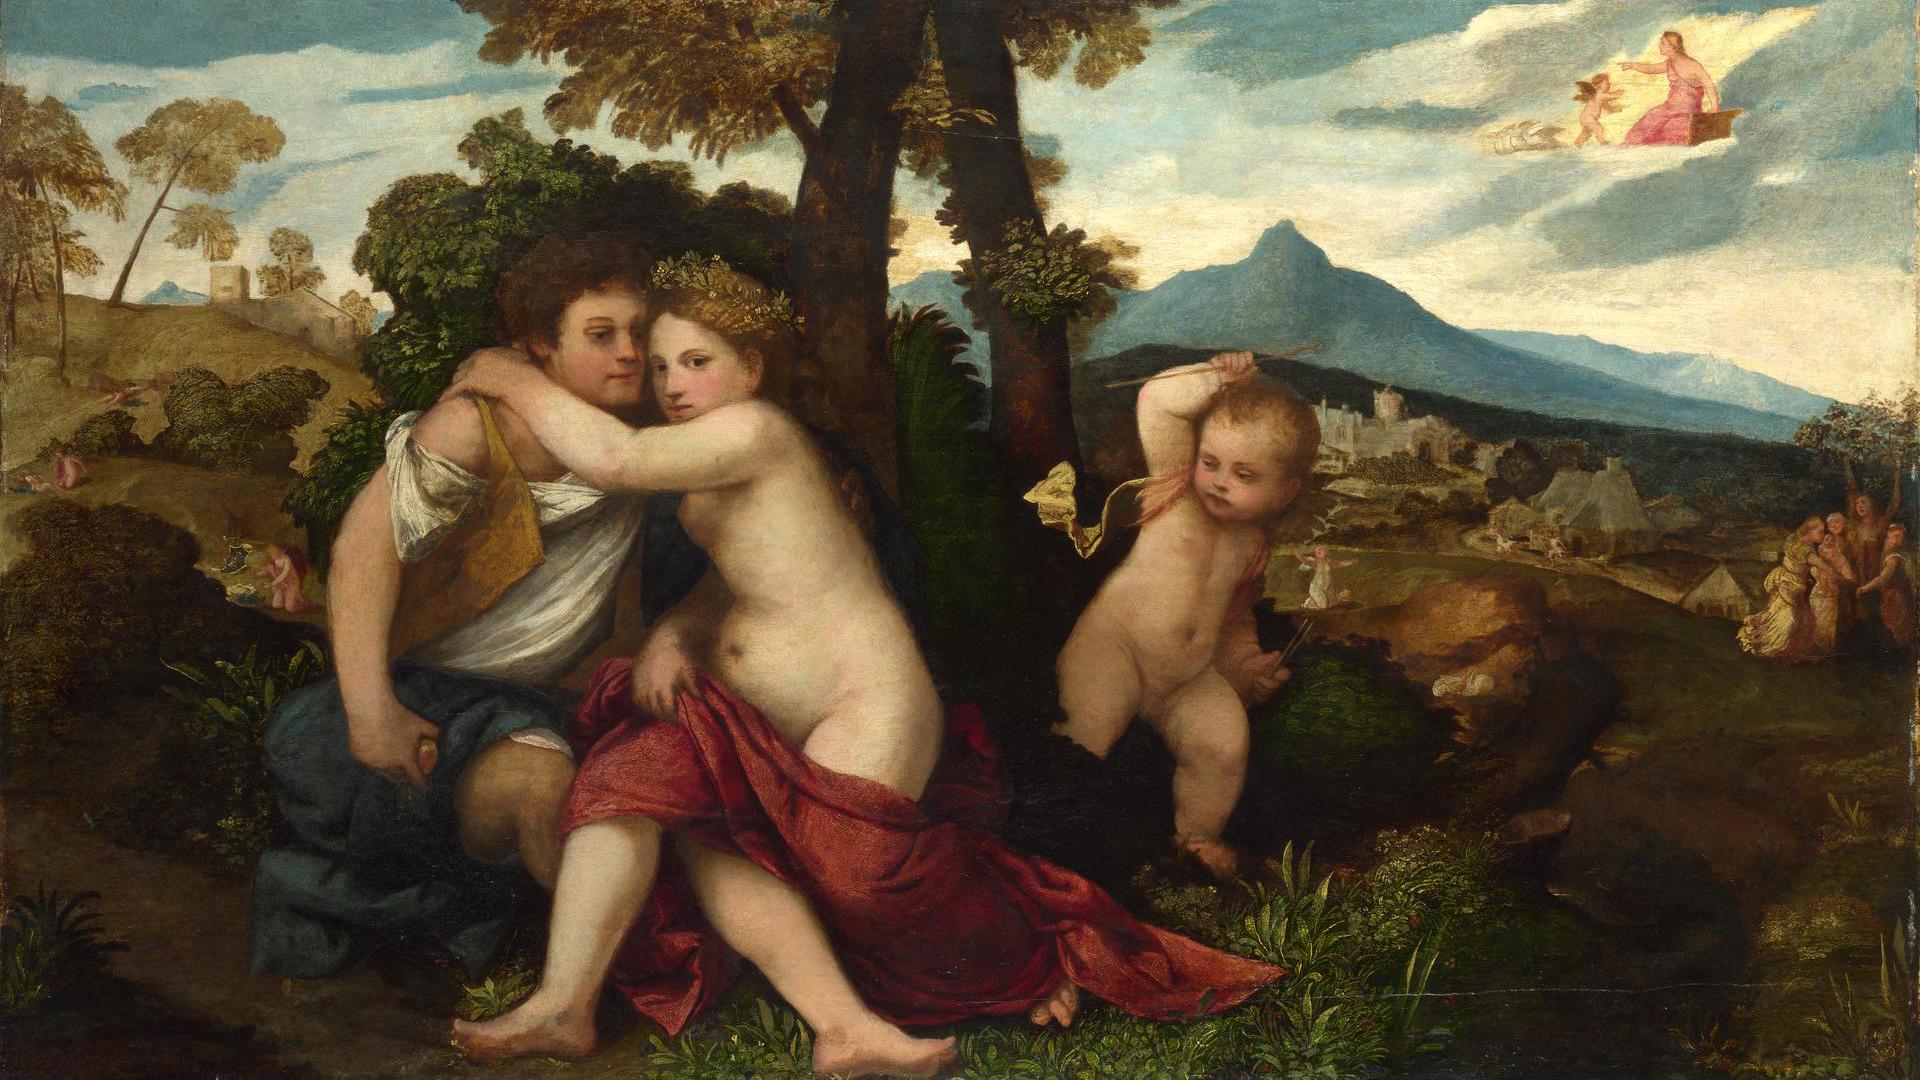 Mythological Scene by Follower of Titian